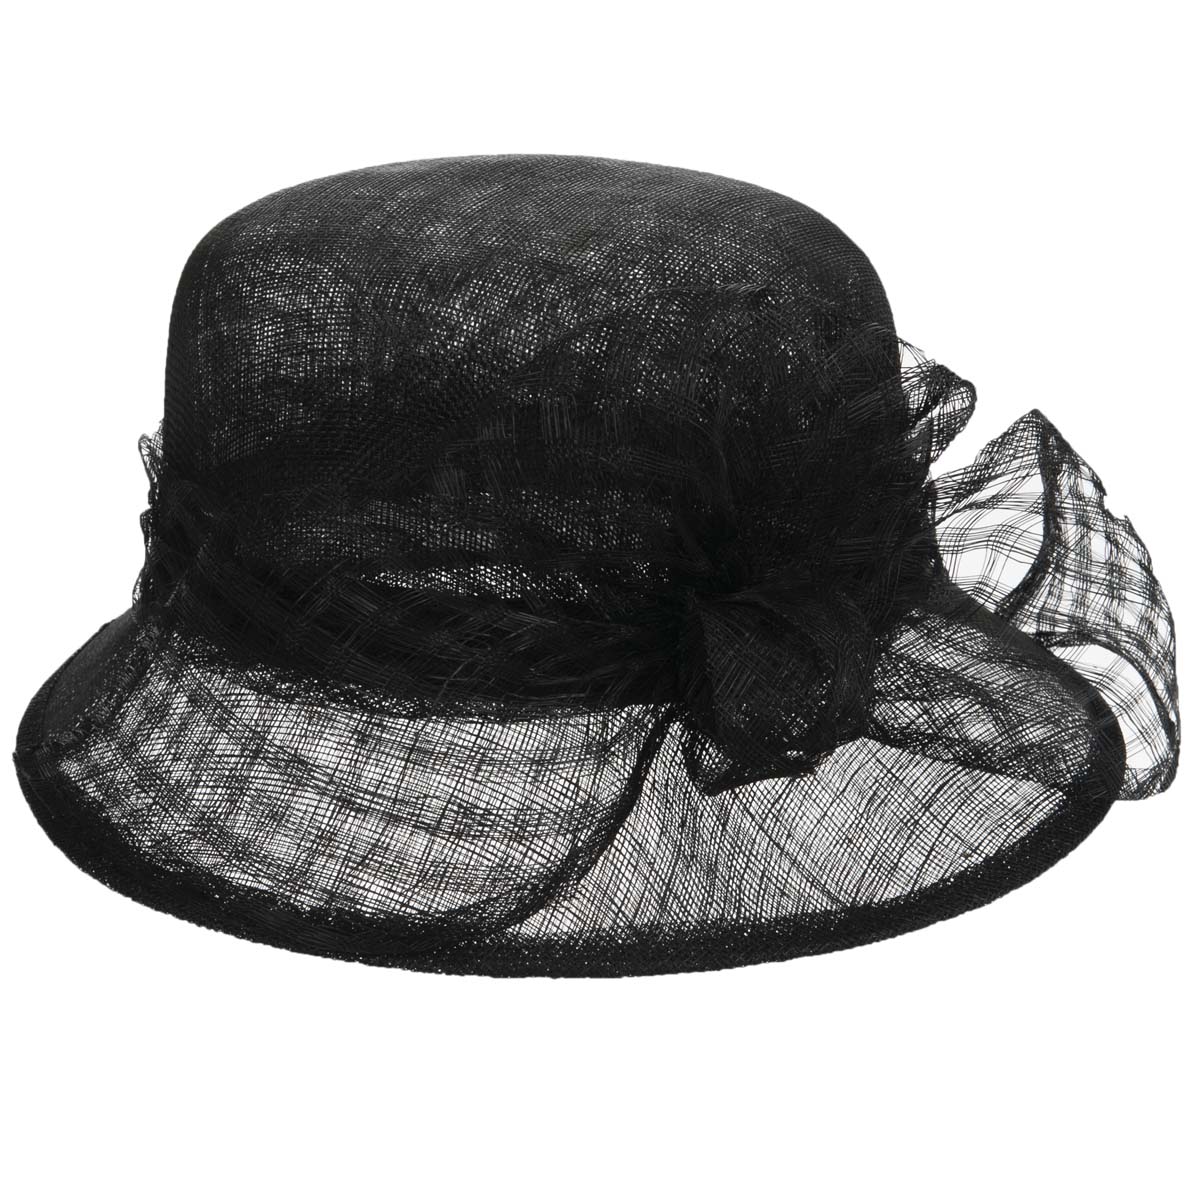 Hat for women